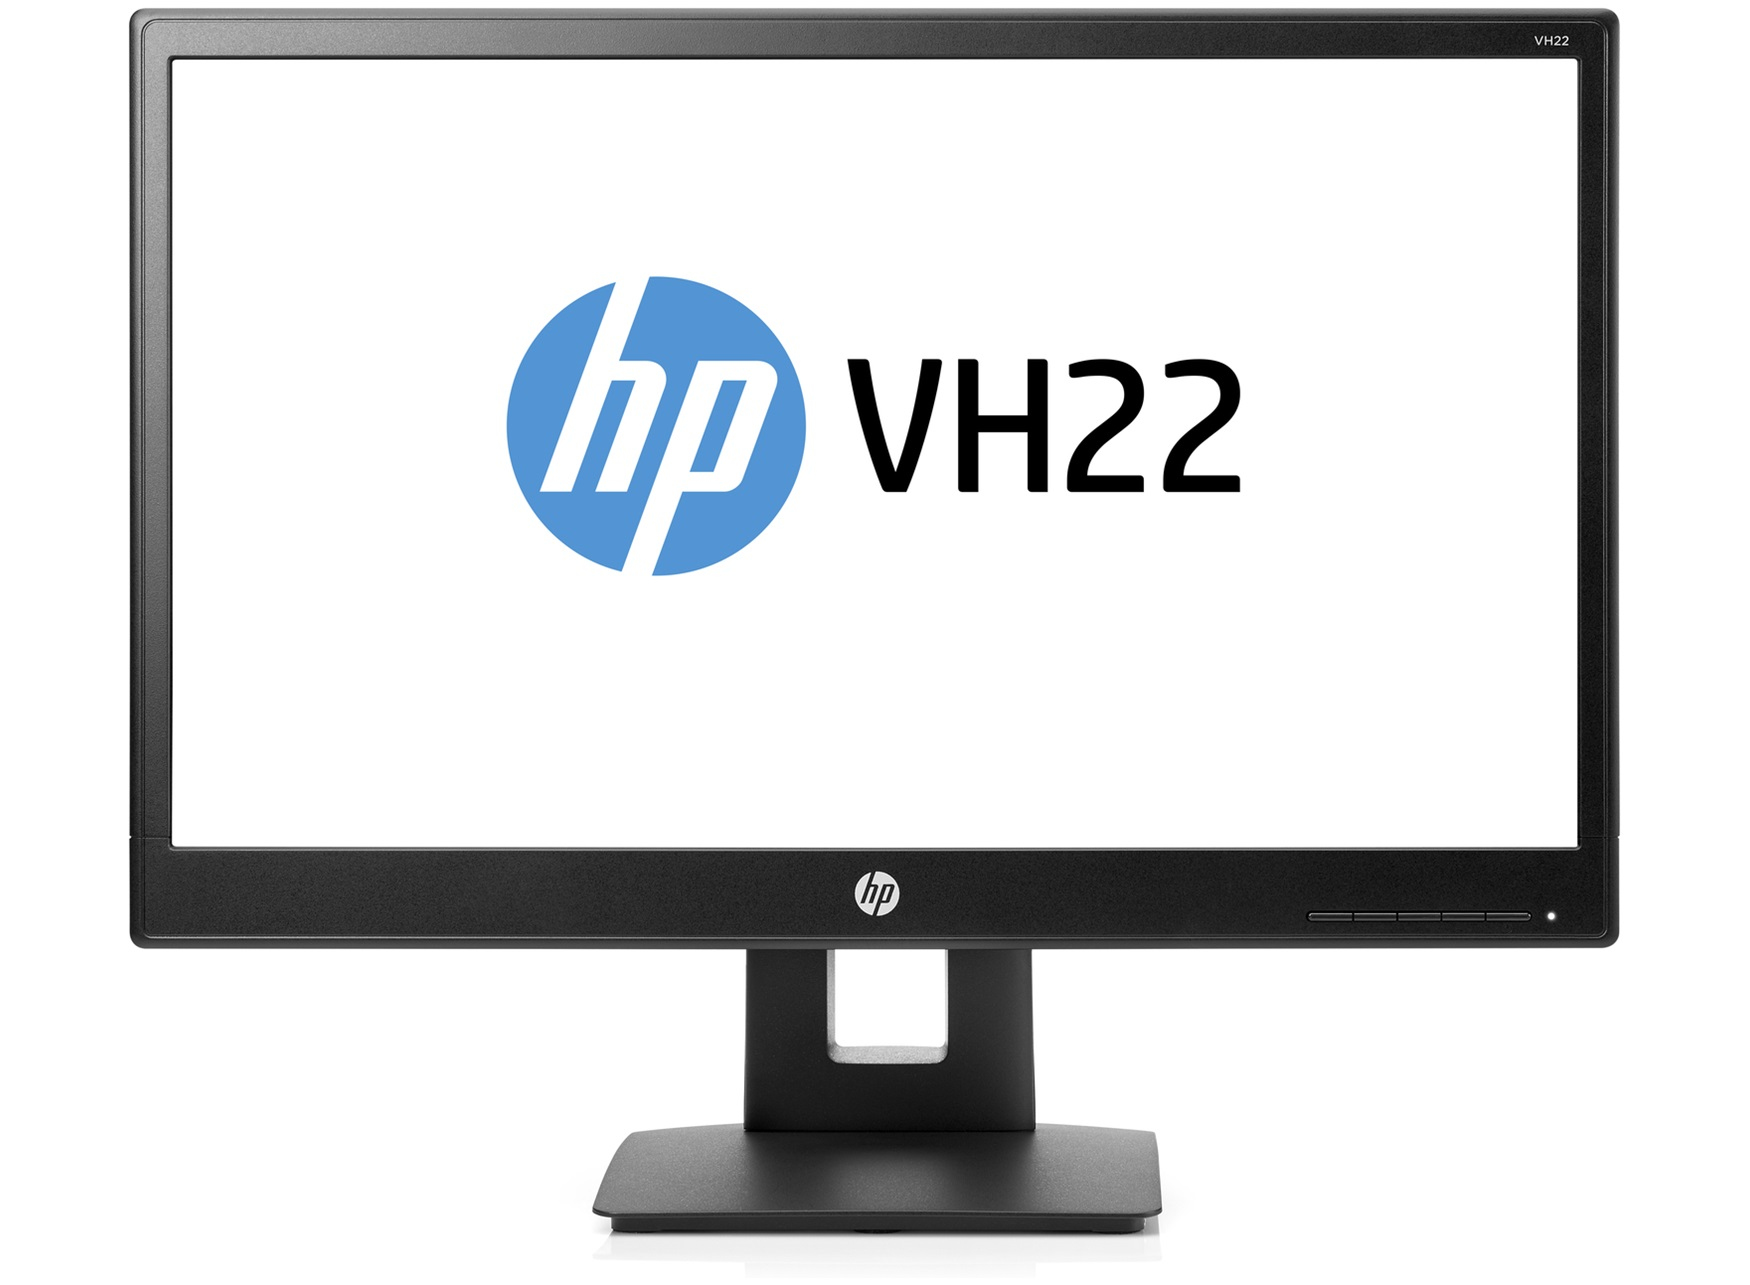 HP vh22 - LED monitor - 21.5" (21.5" zobrazitelný) - 1920 x 1080 Full HD (1080p) - TN - 250 cd/m2 - X0N05AA#ABB